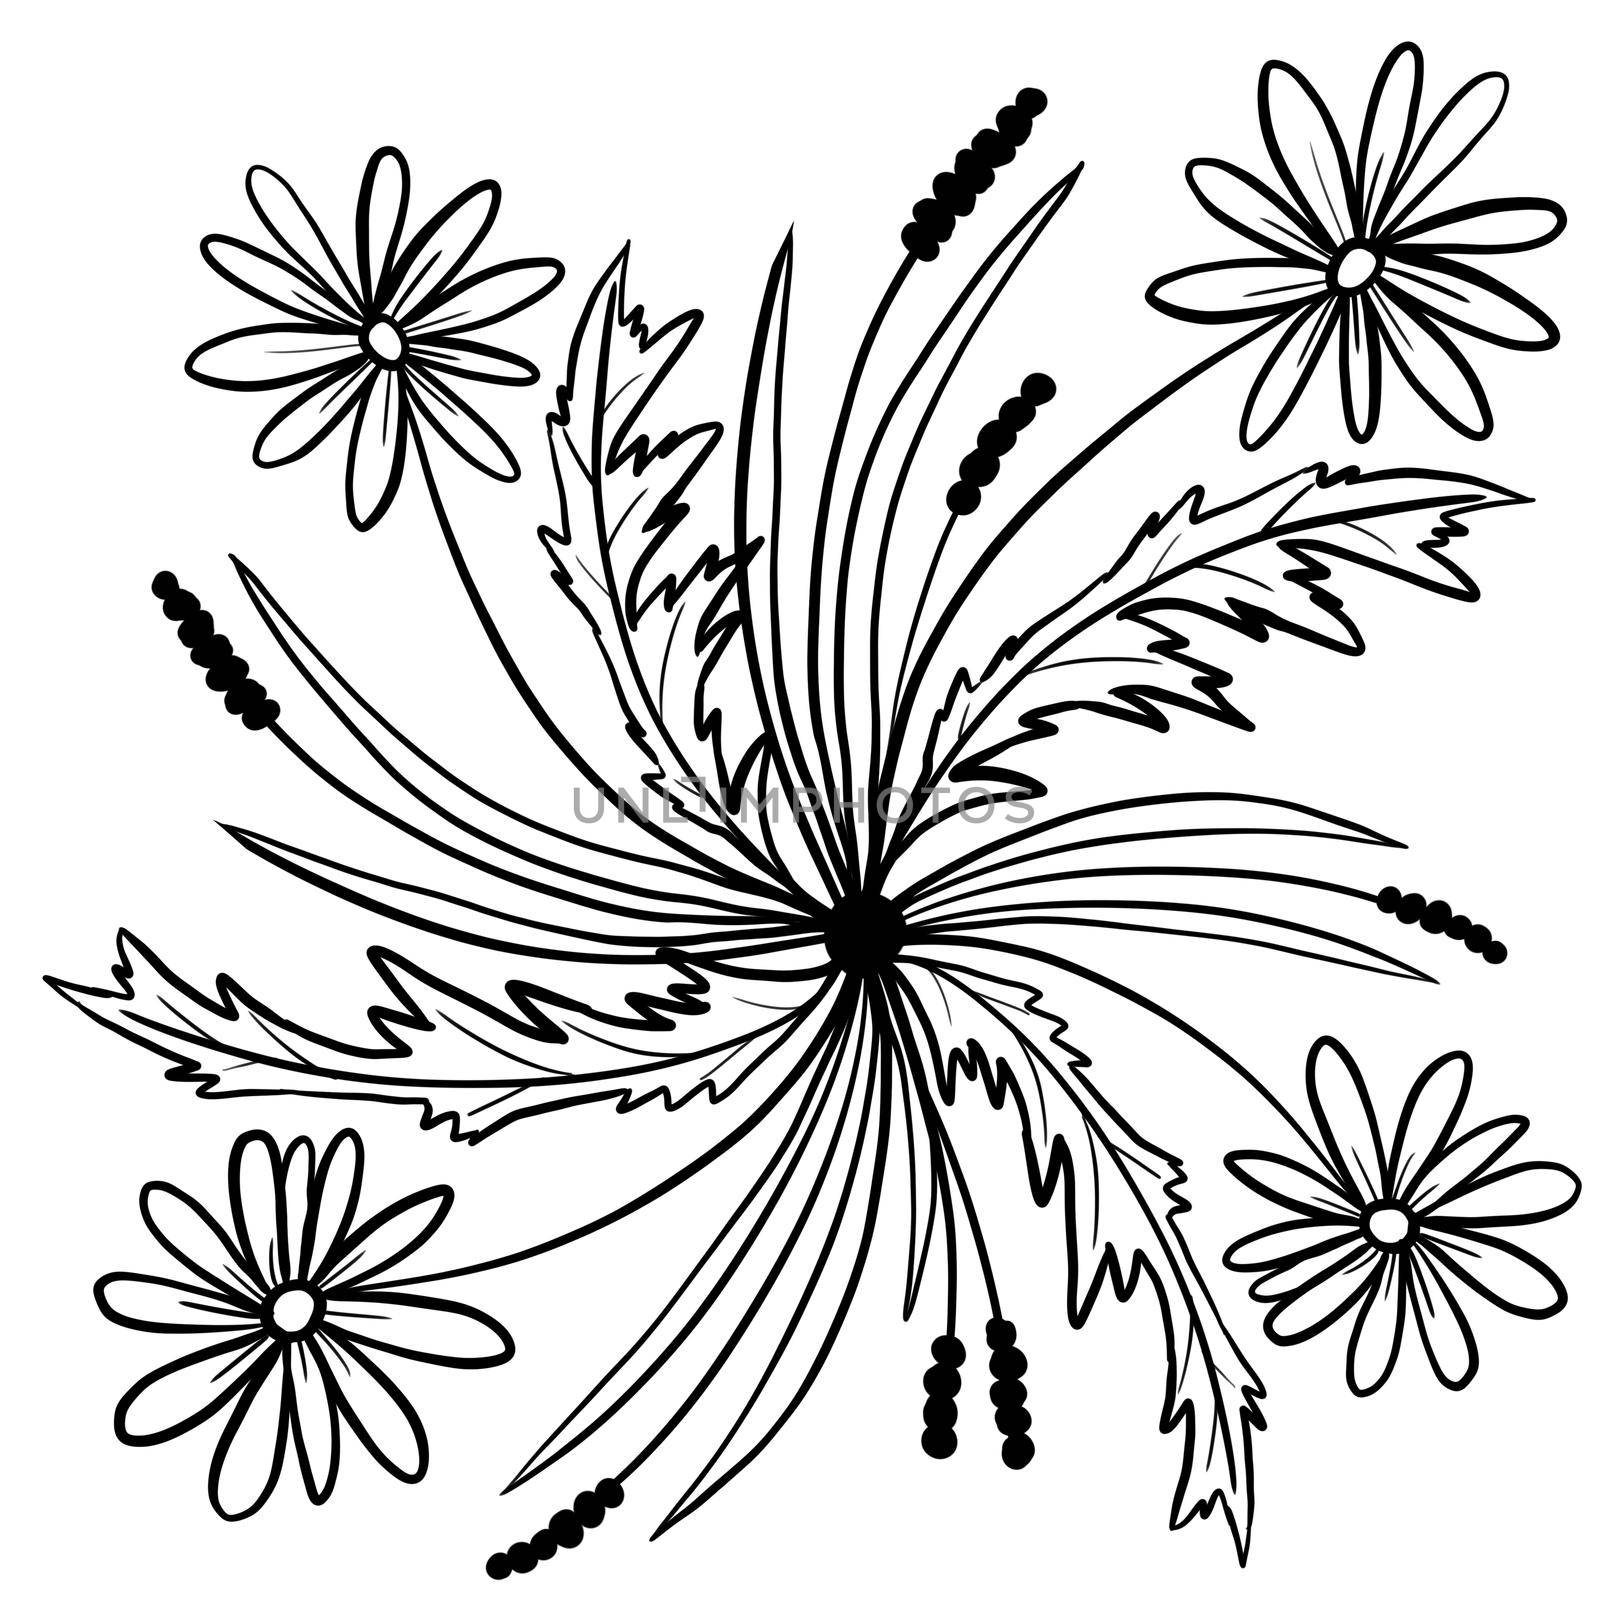 Hand drawn floral flower leaves illustration, black white elegant minimalist wedding ornament, Line art minimalism tatoo style design summer spring nature branch foliage blossom by Lagmar